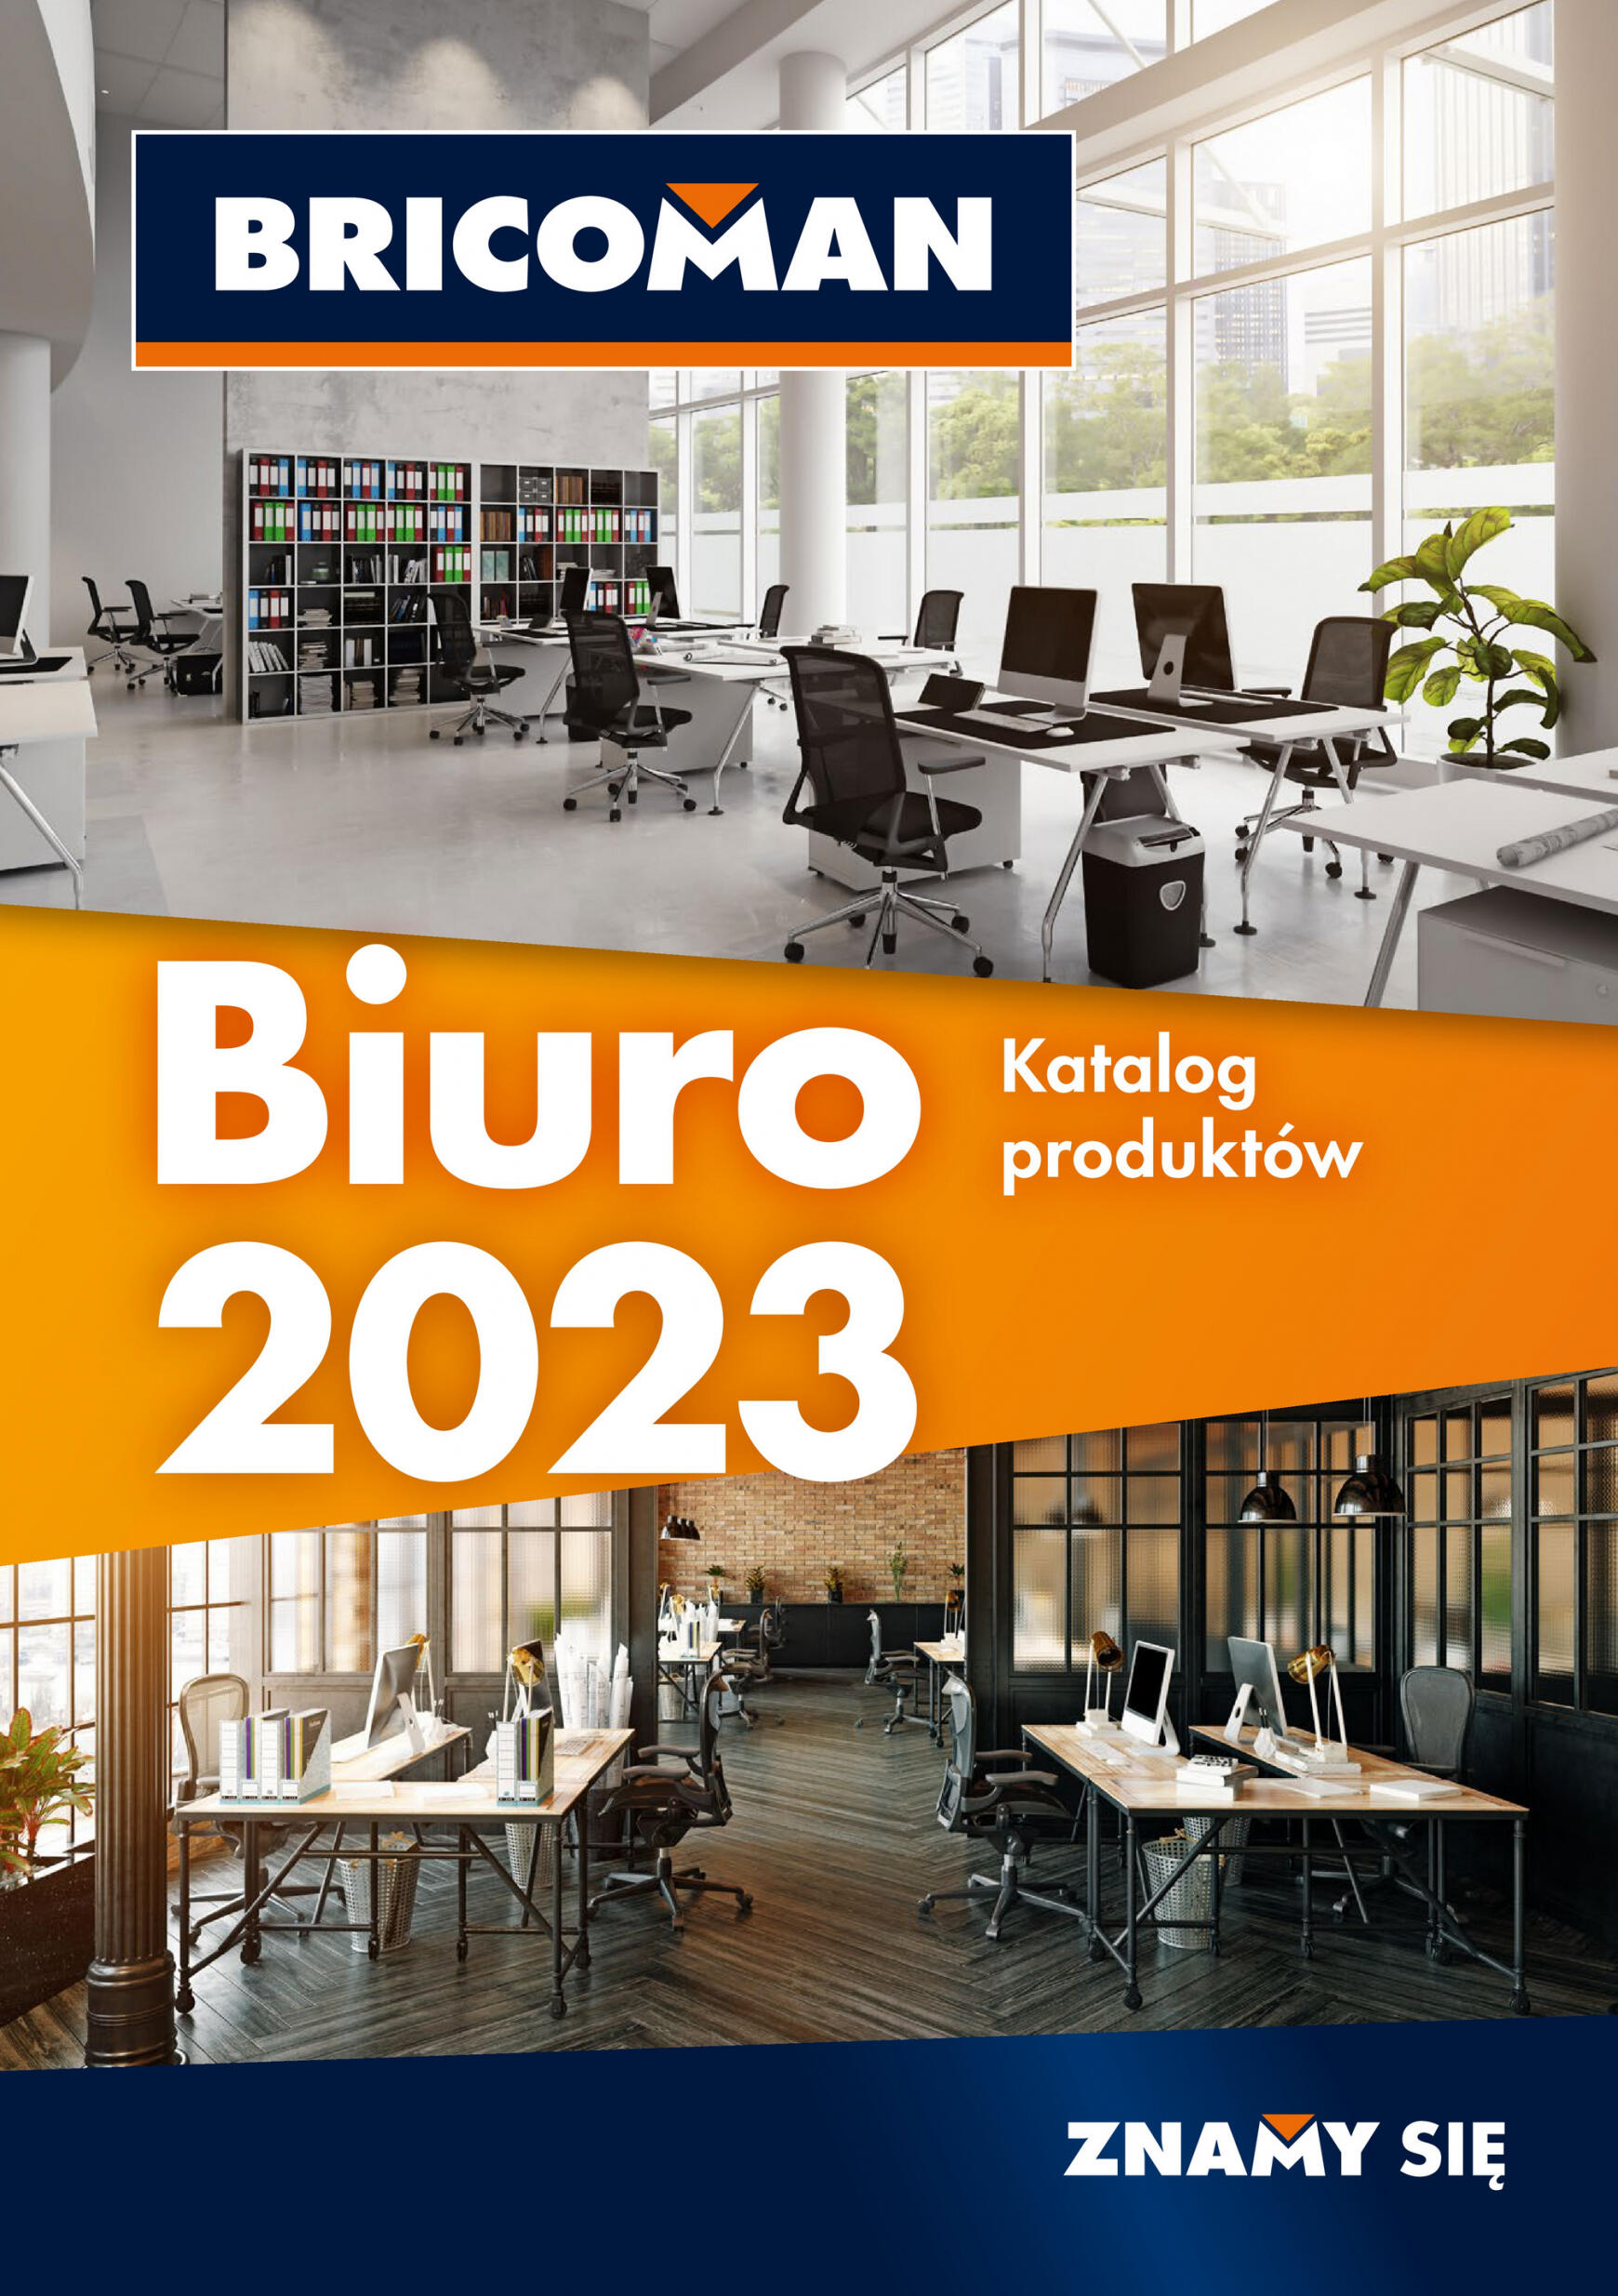 bricoman - Bricoman - Biuro 2023 Katalog produktów - page: 1